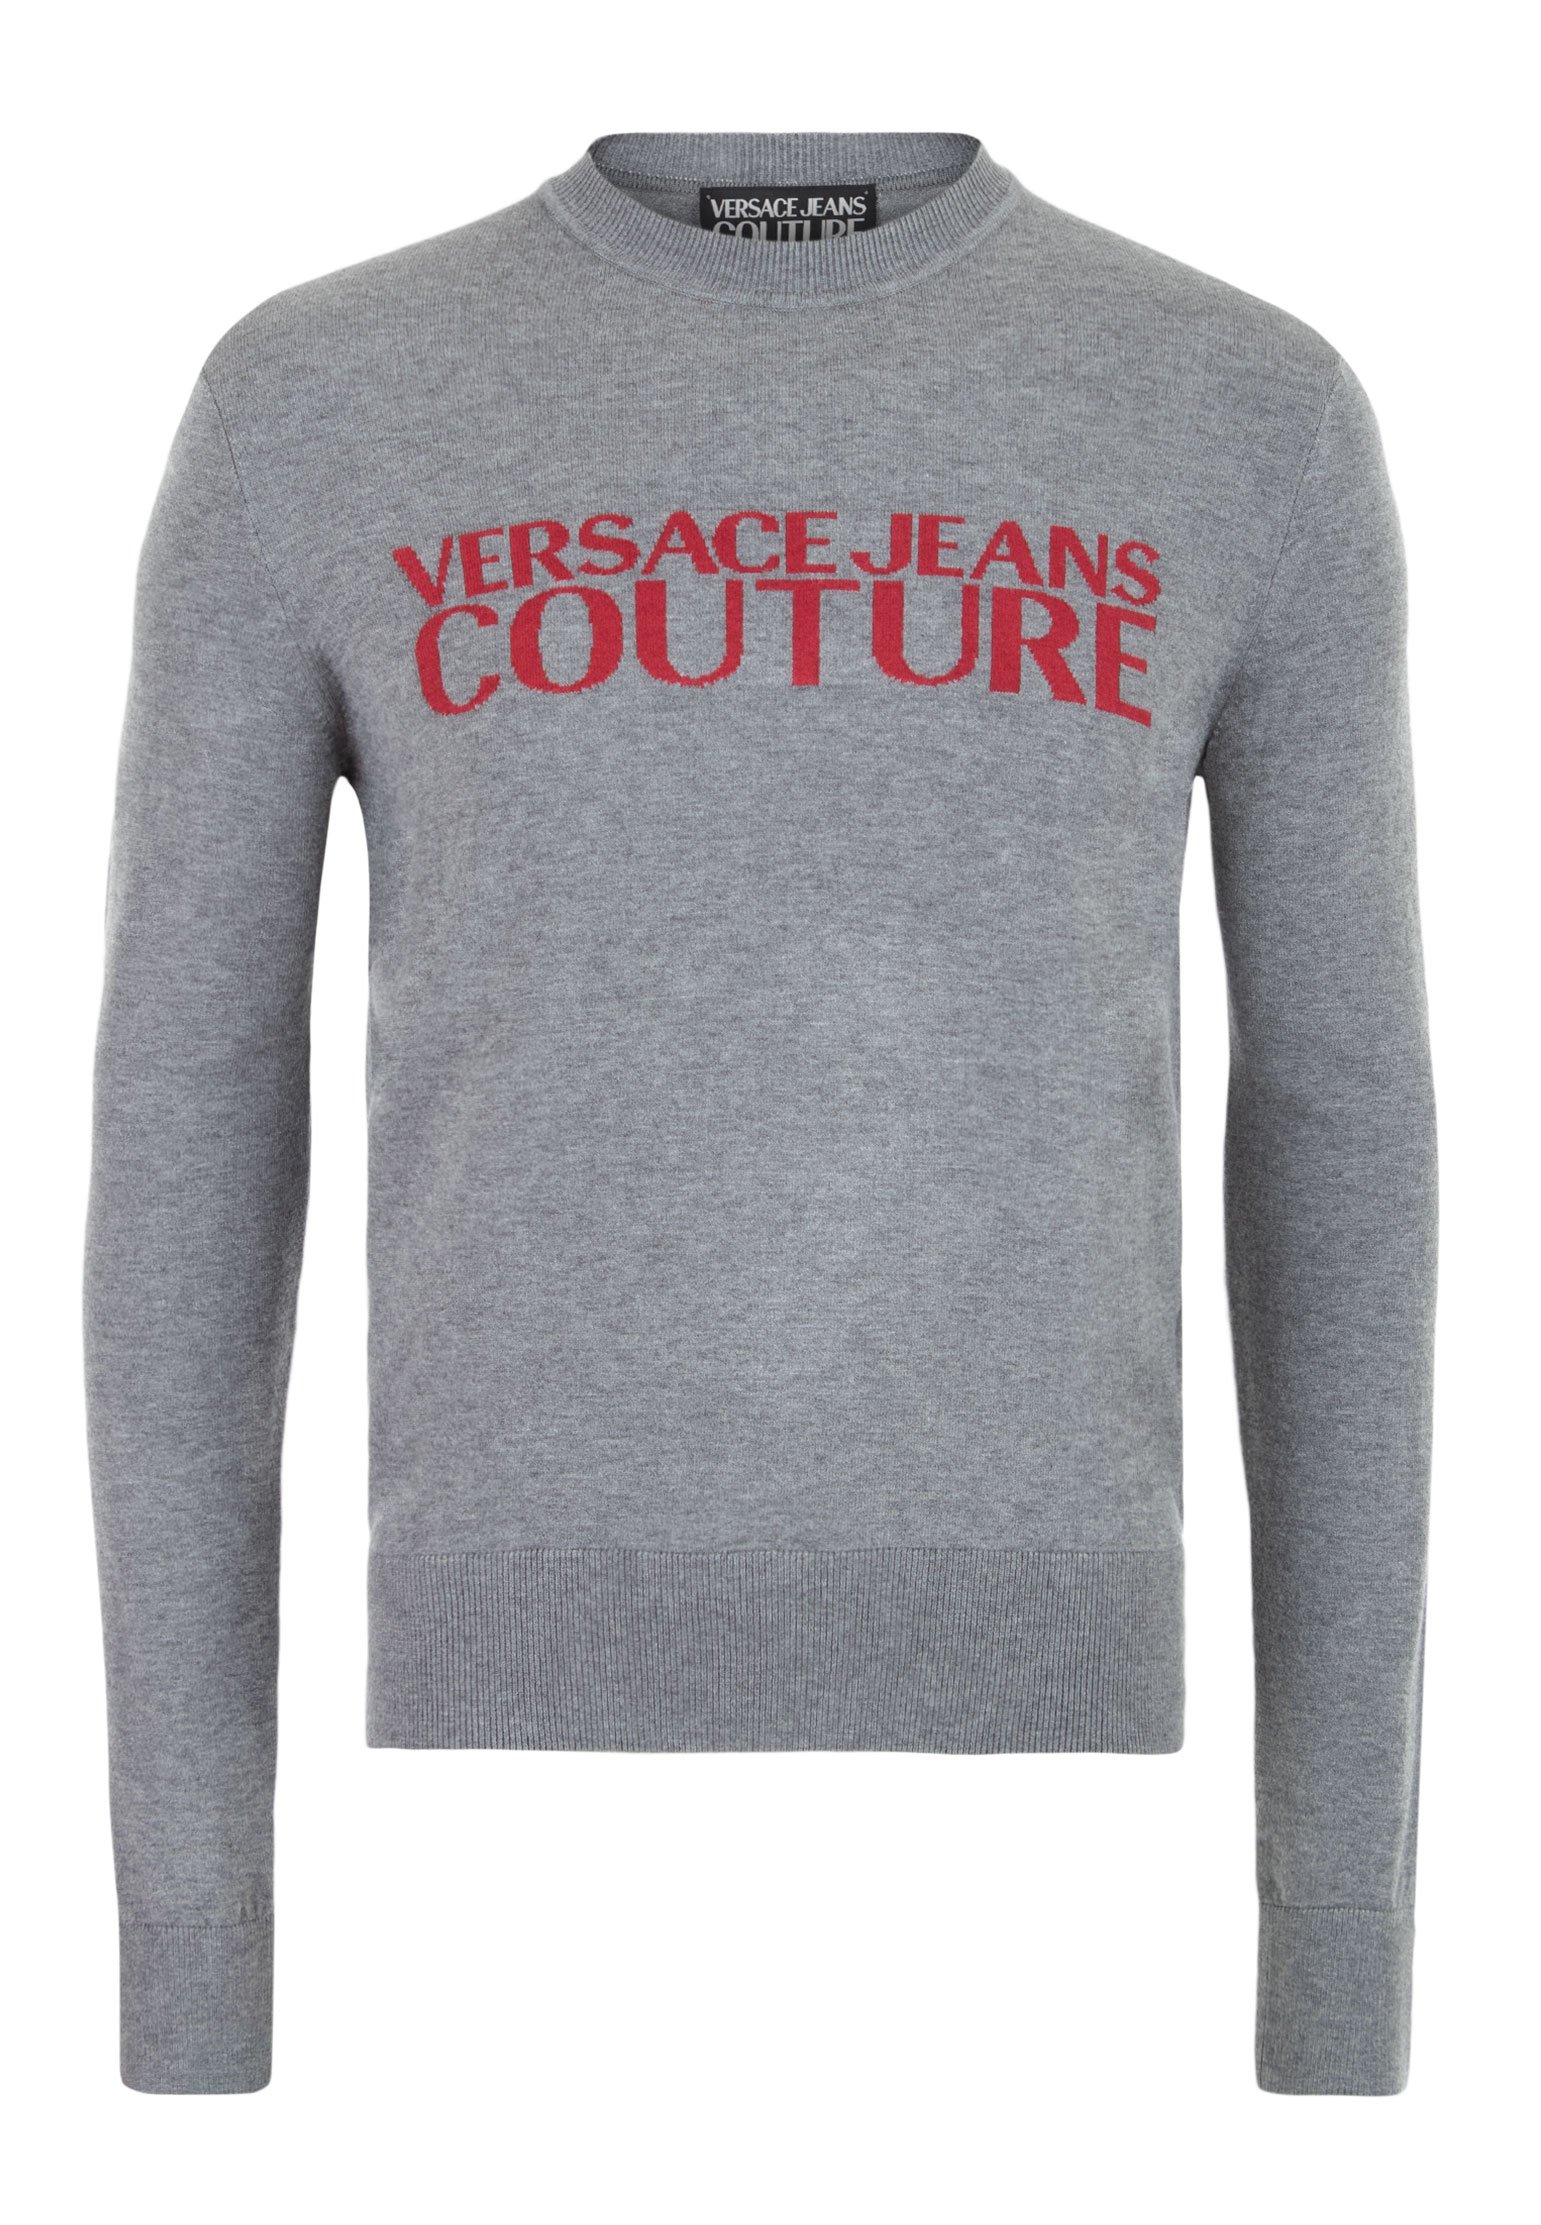 Джемпер мужской Versace Jeans Couture 123543 серый S